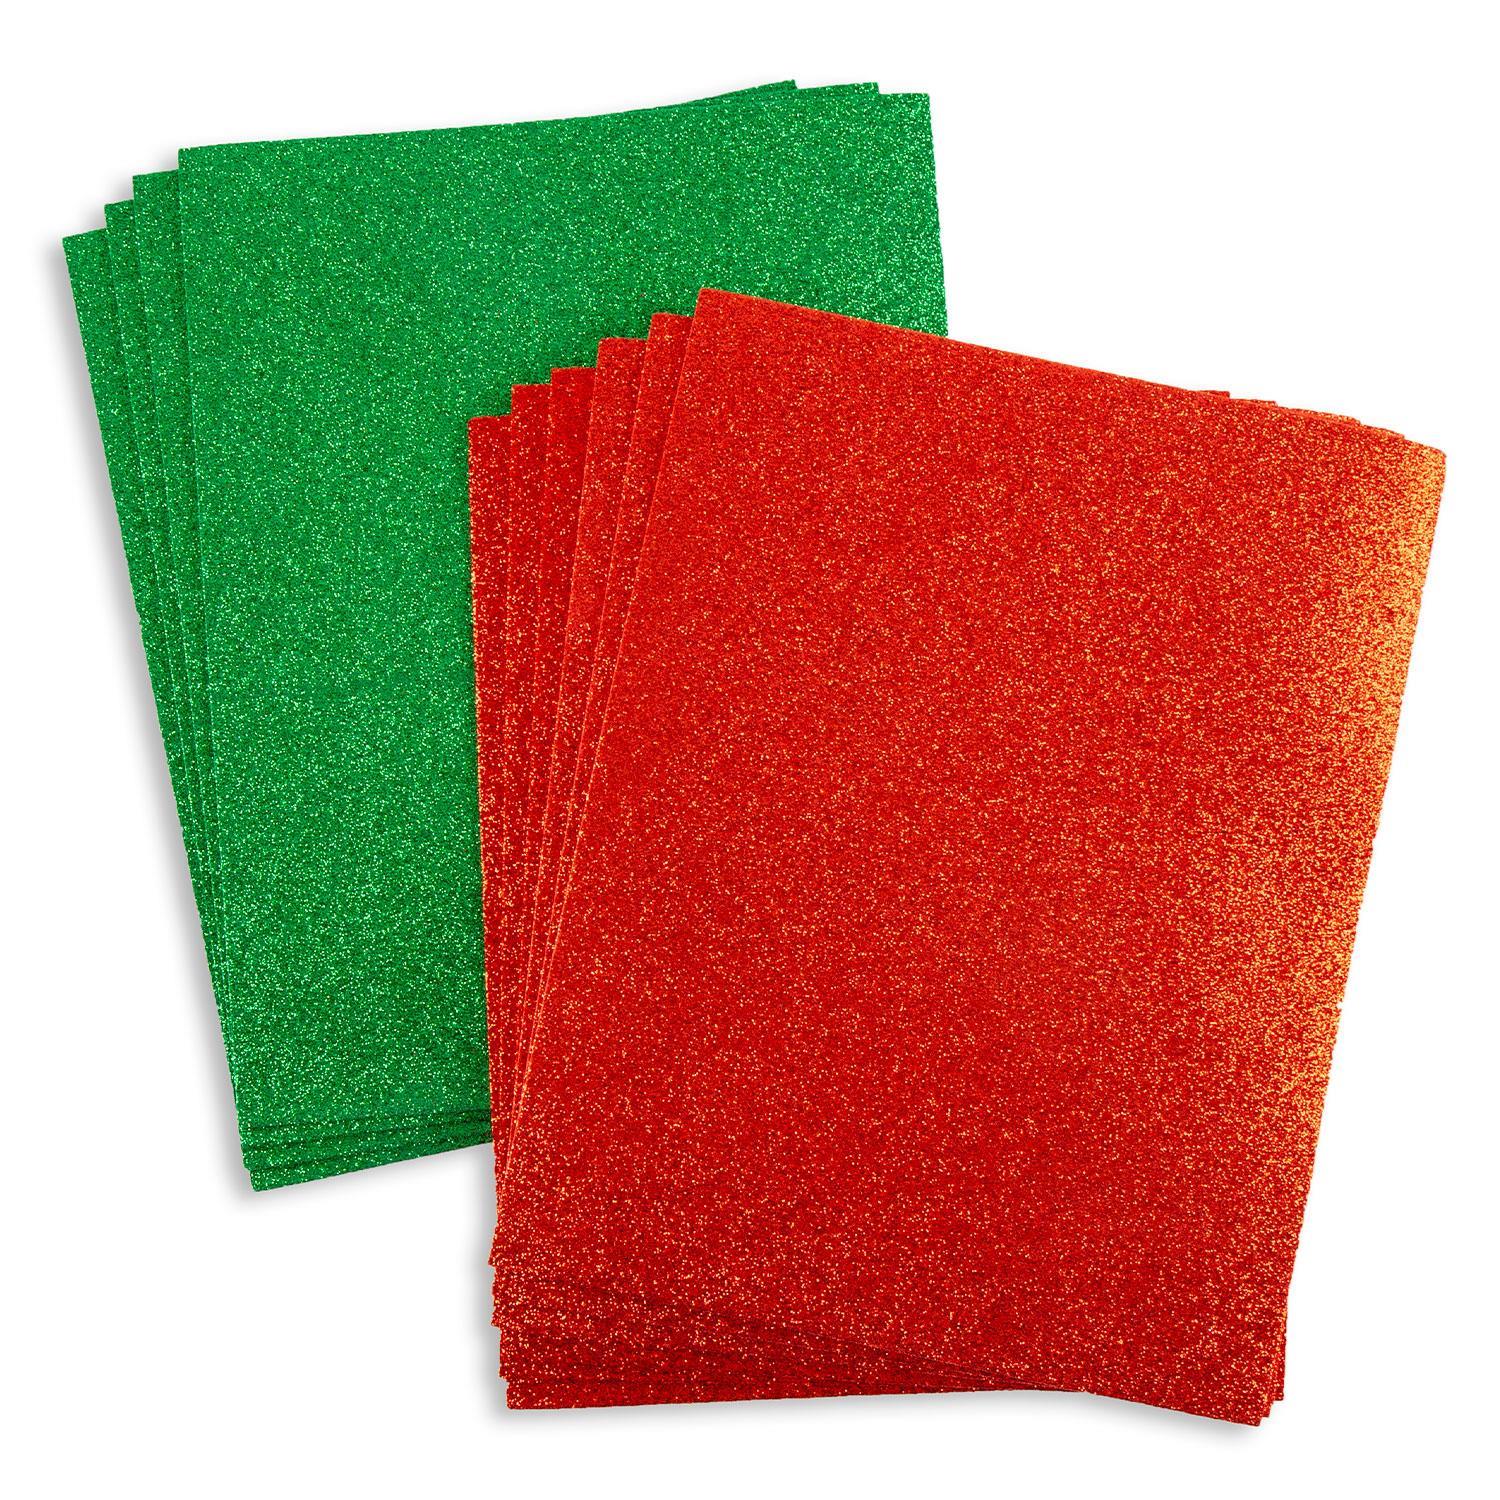 Spellbinders Pop Up Die Cutting Glitter Foam Sheets - Choose 2 - Red & Green